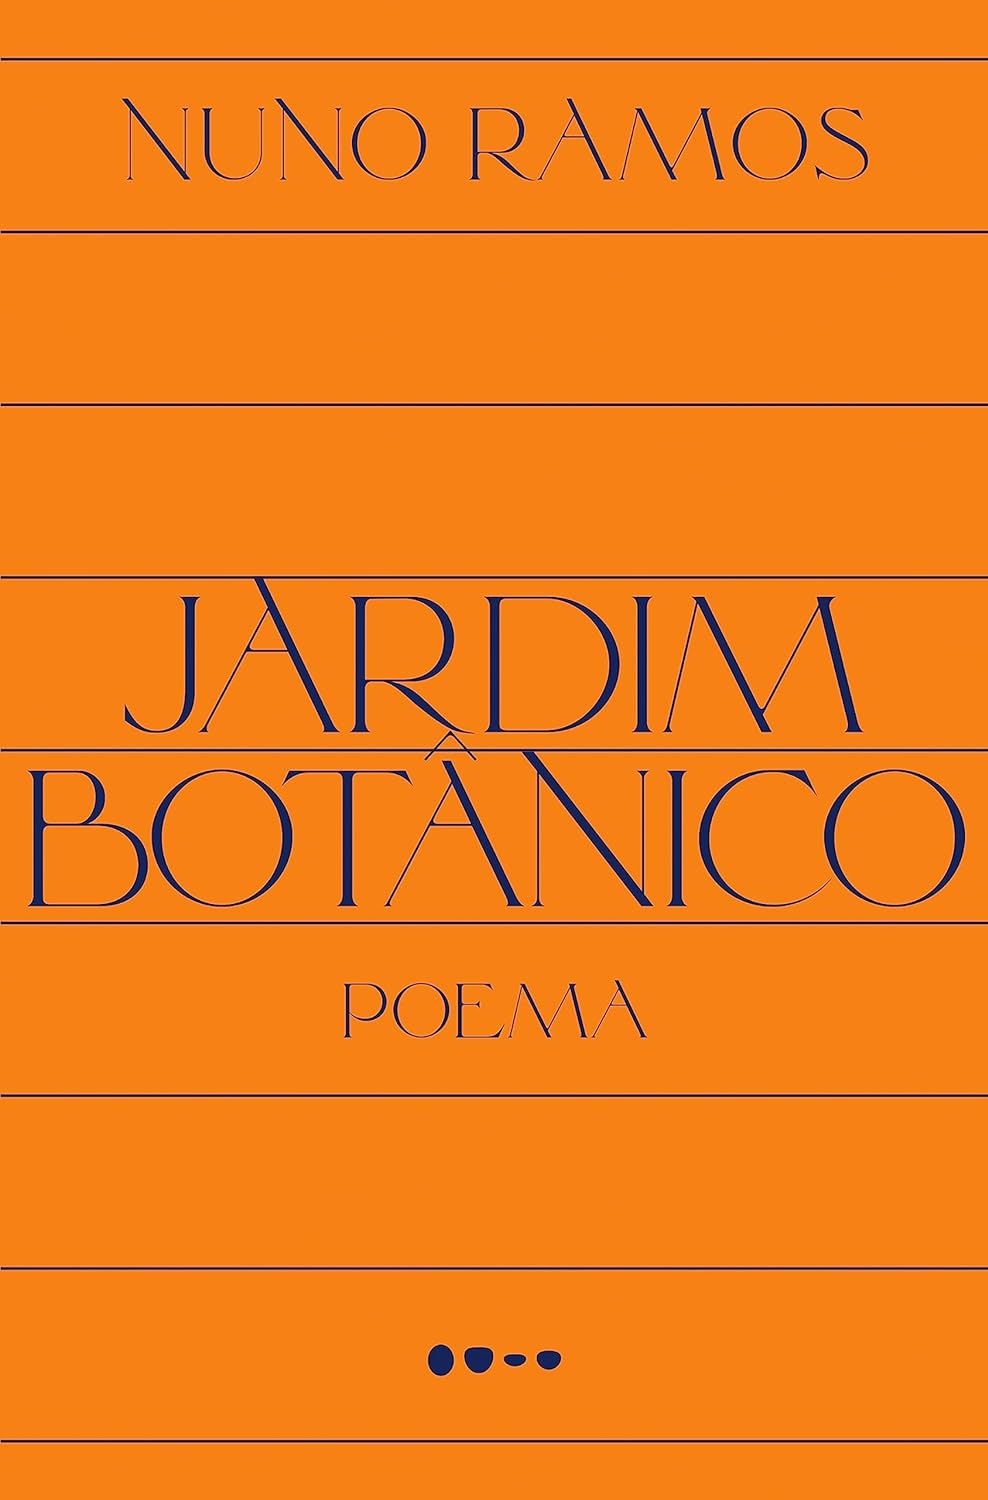 cover of Jardim botânico : poema